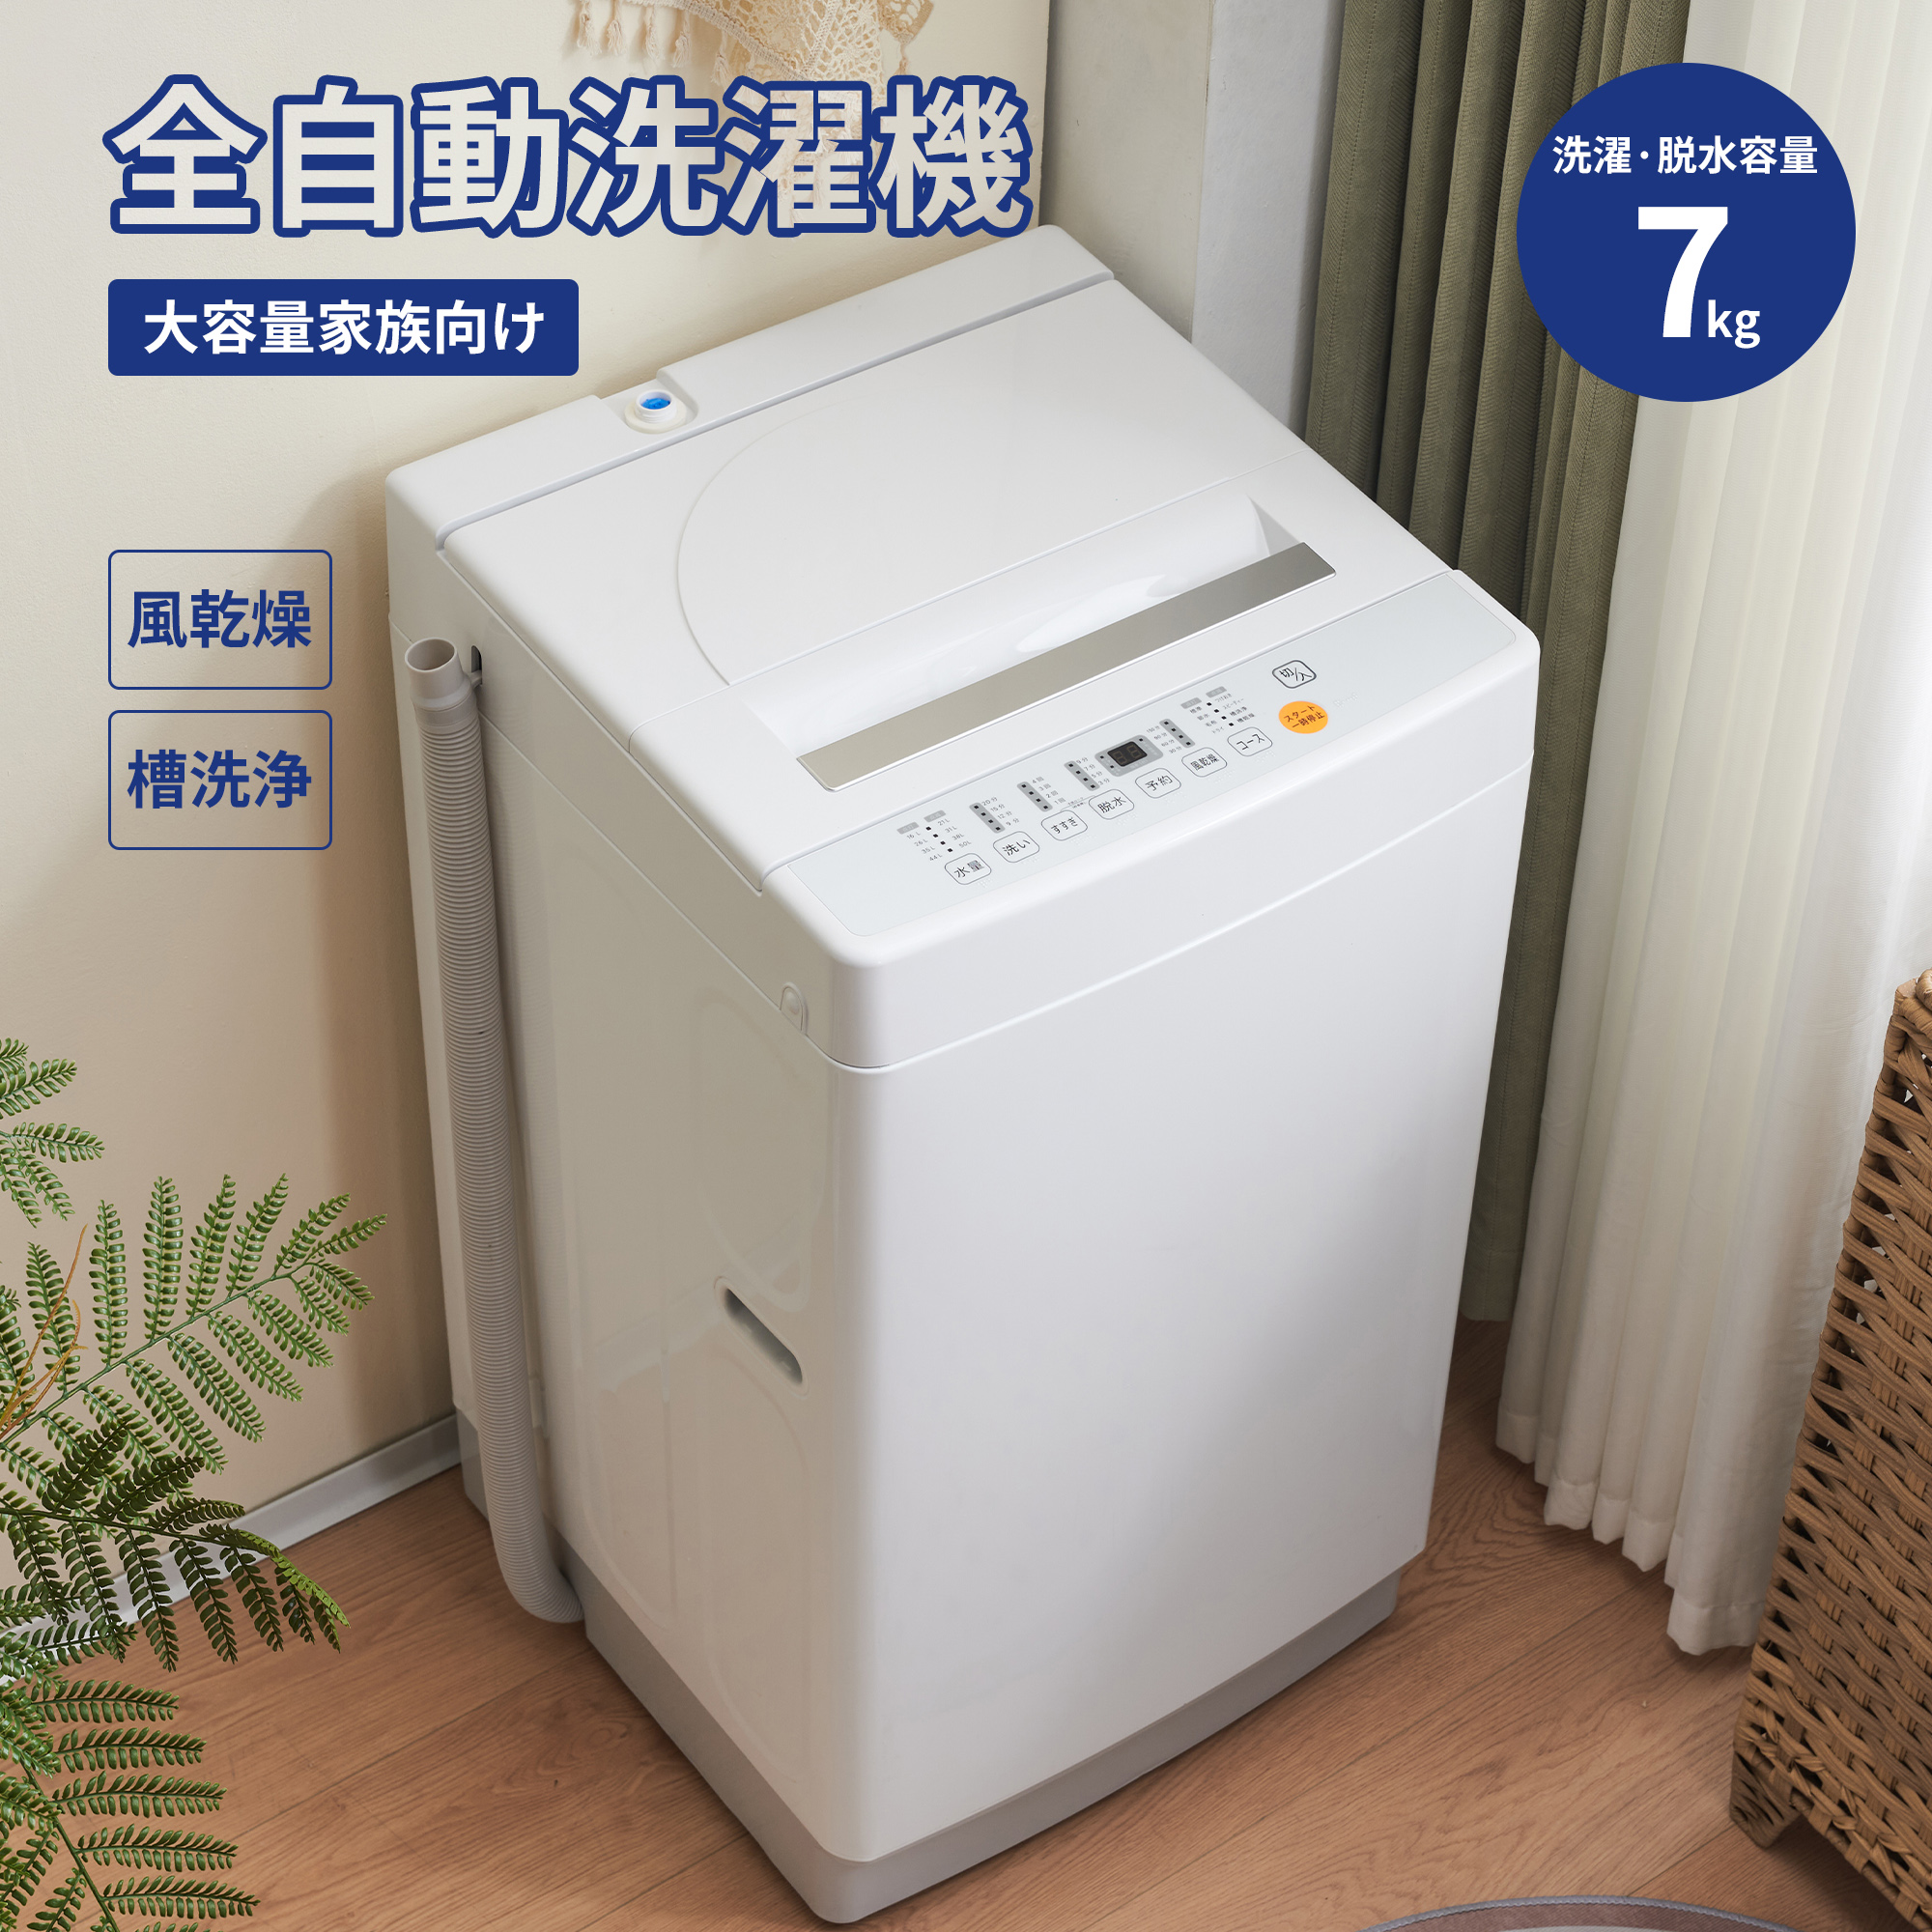 155B ヤマダ 小型 縦型洗濯機 容量7kg 一人暮らし 単身向け 冷蔵庫お得 